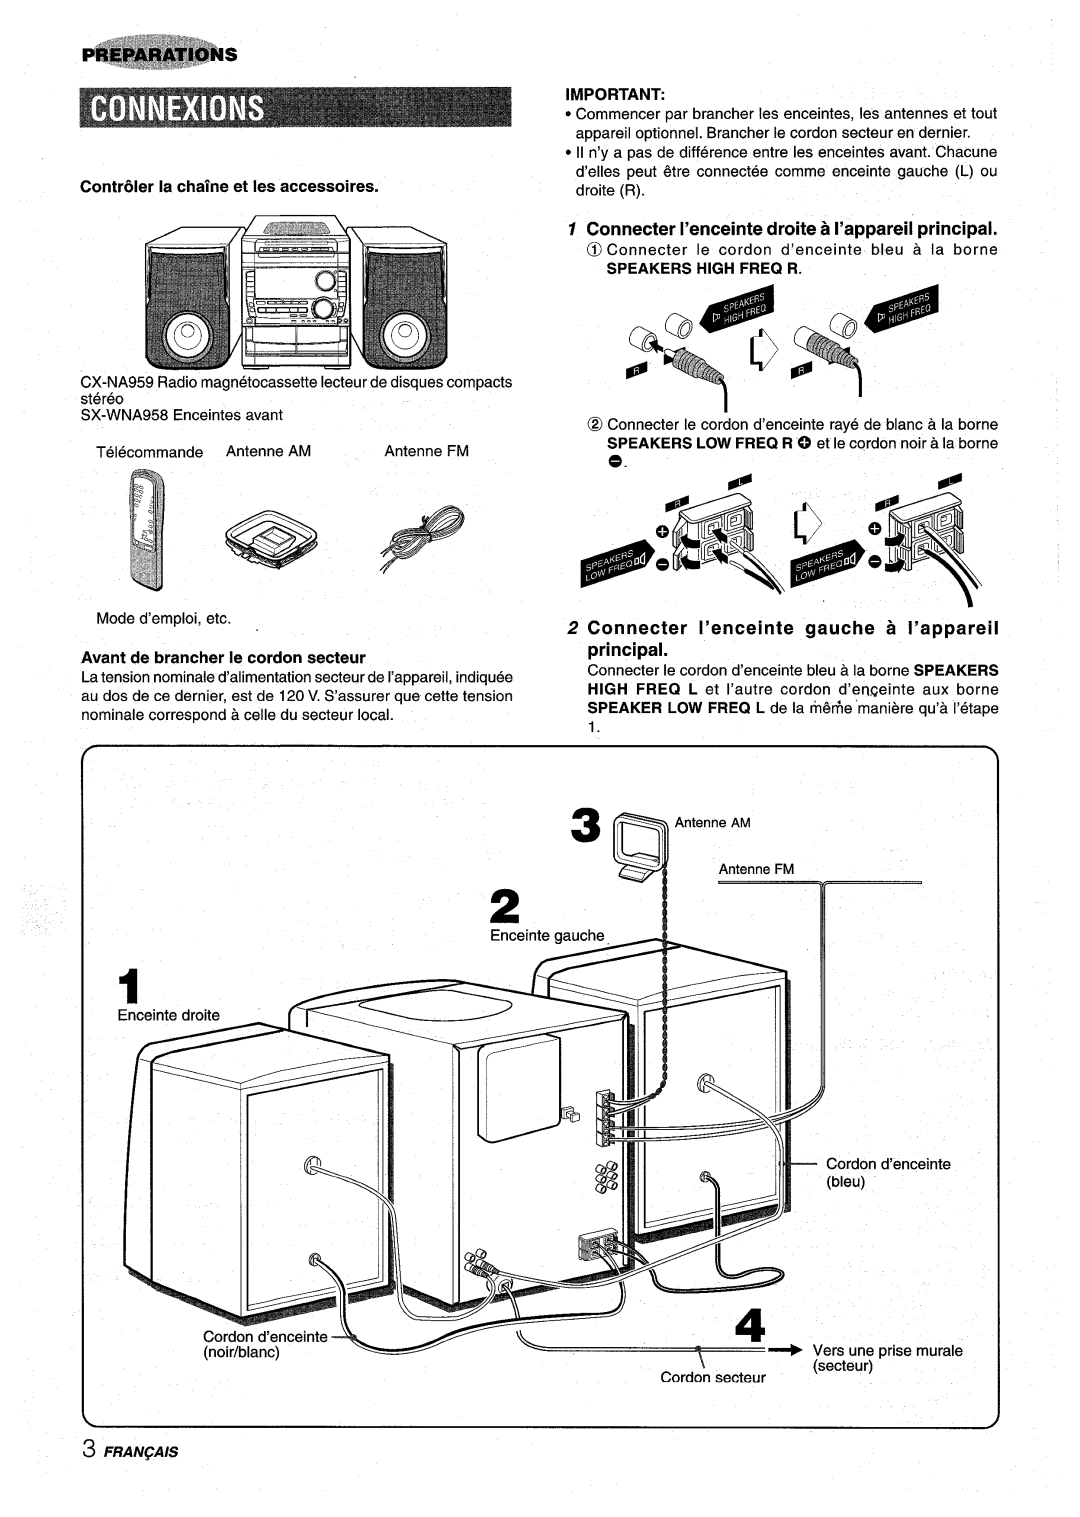 Sony NSX-A959 manual Connecter I’enceinte droite a I’appareil principal, Connecter I’enceinte gauche a I’appareil 